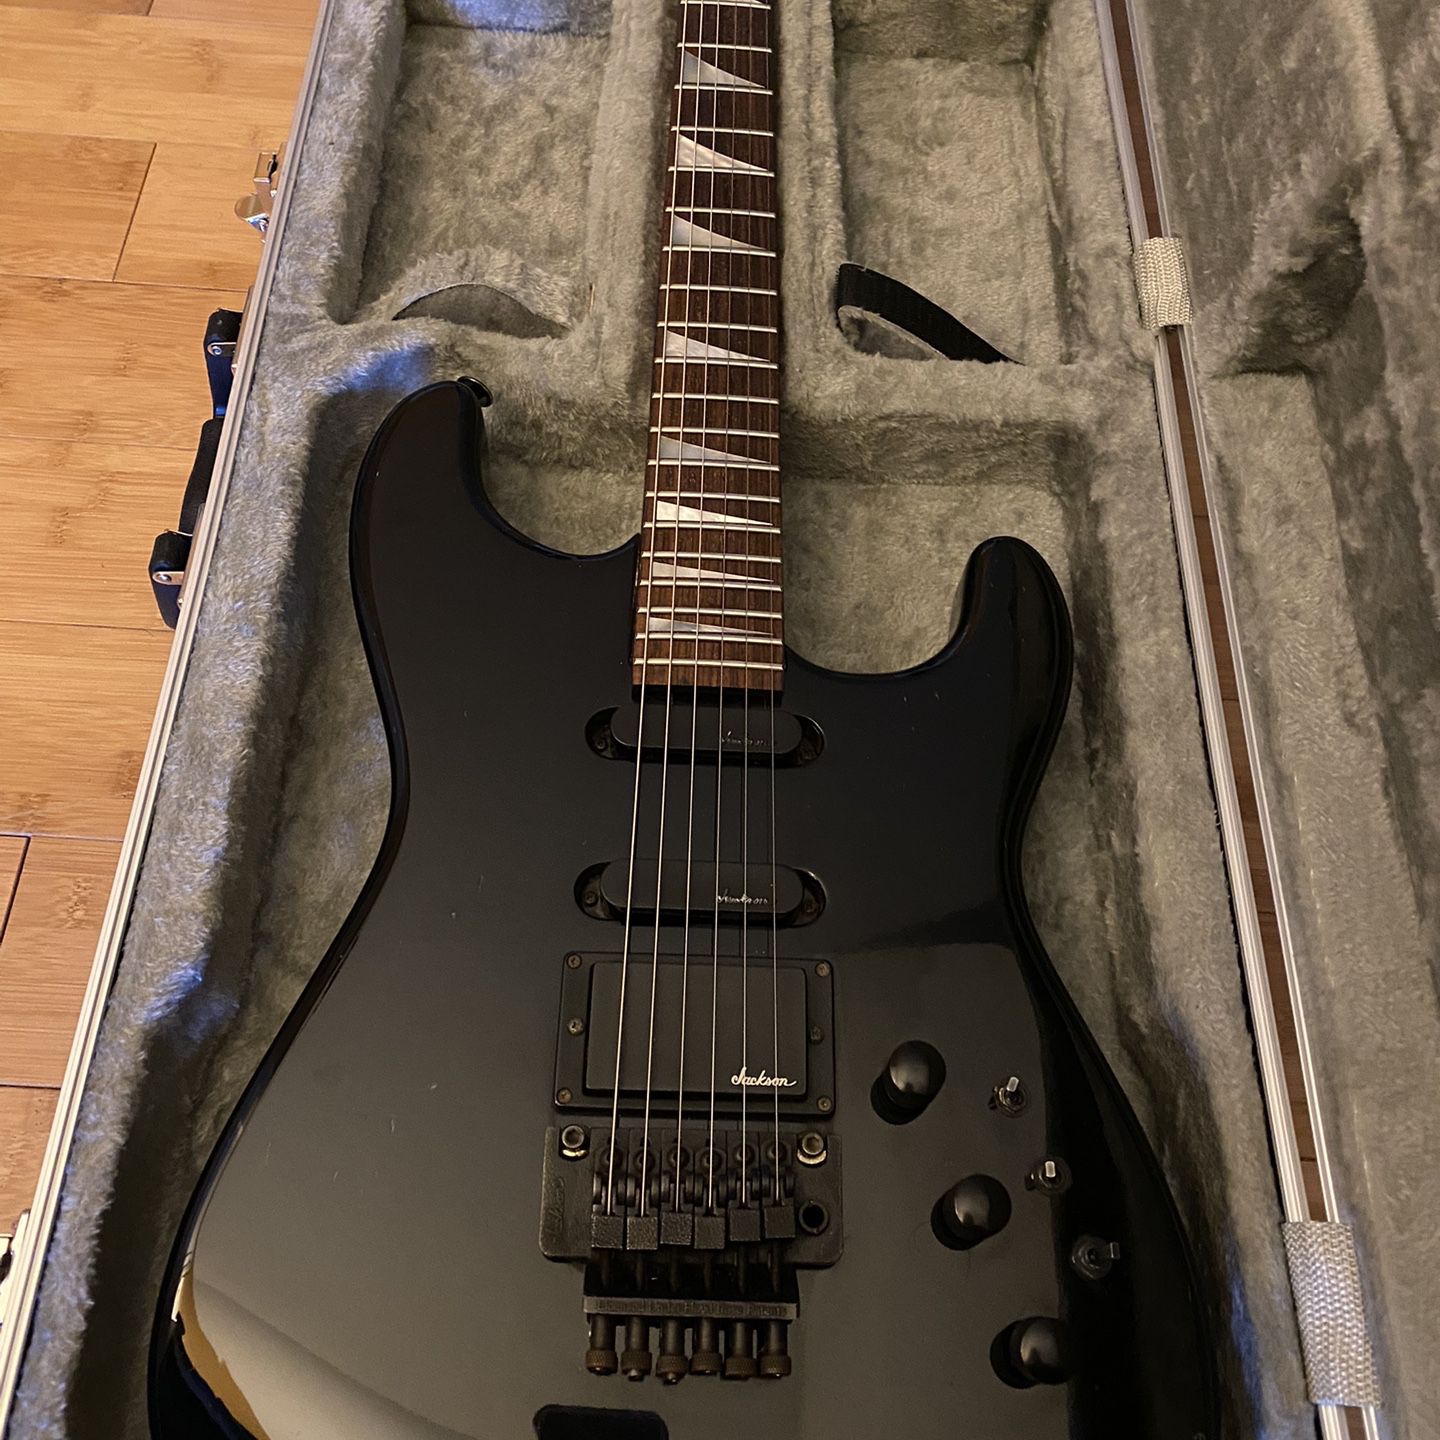 Charvel Model 4 Guitar 1987 for Sale in Portland, OR - OfferUp